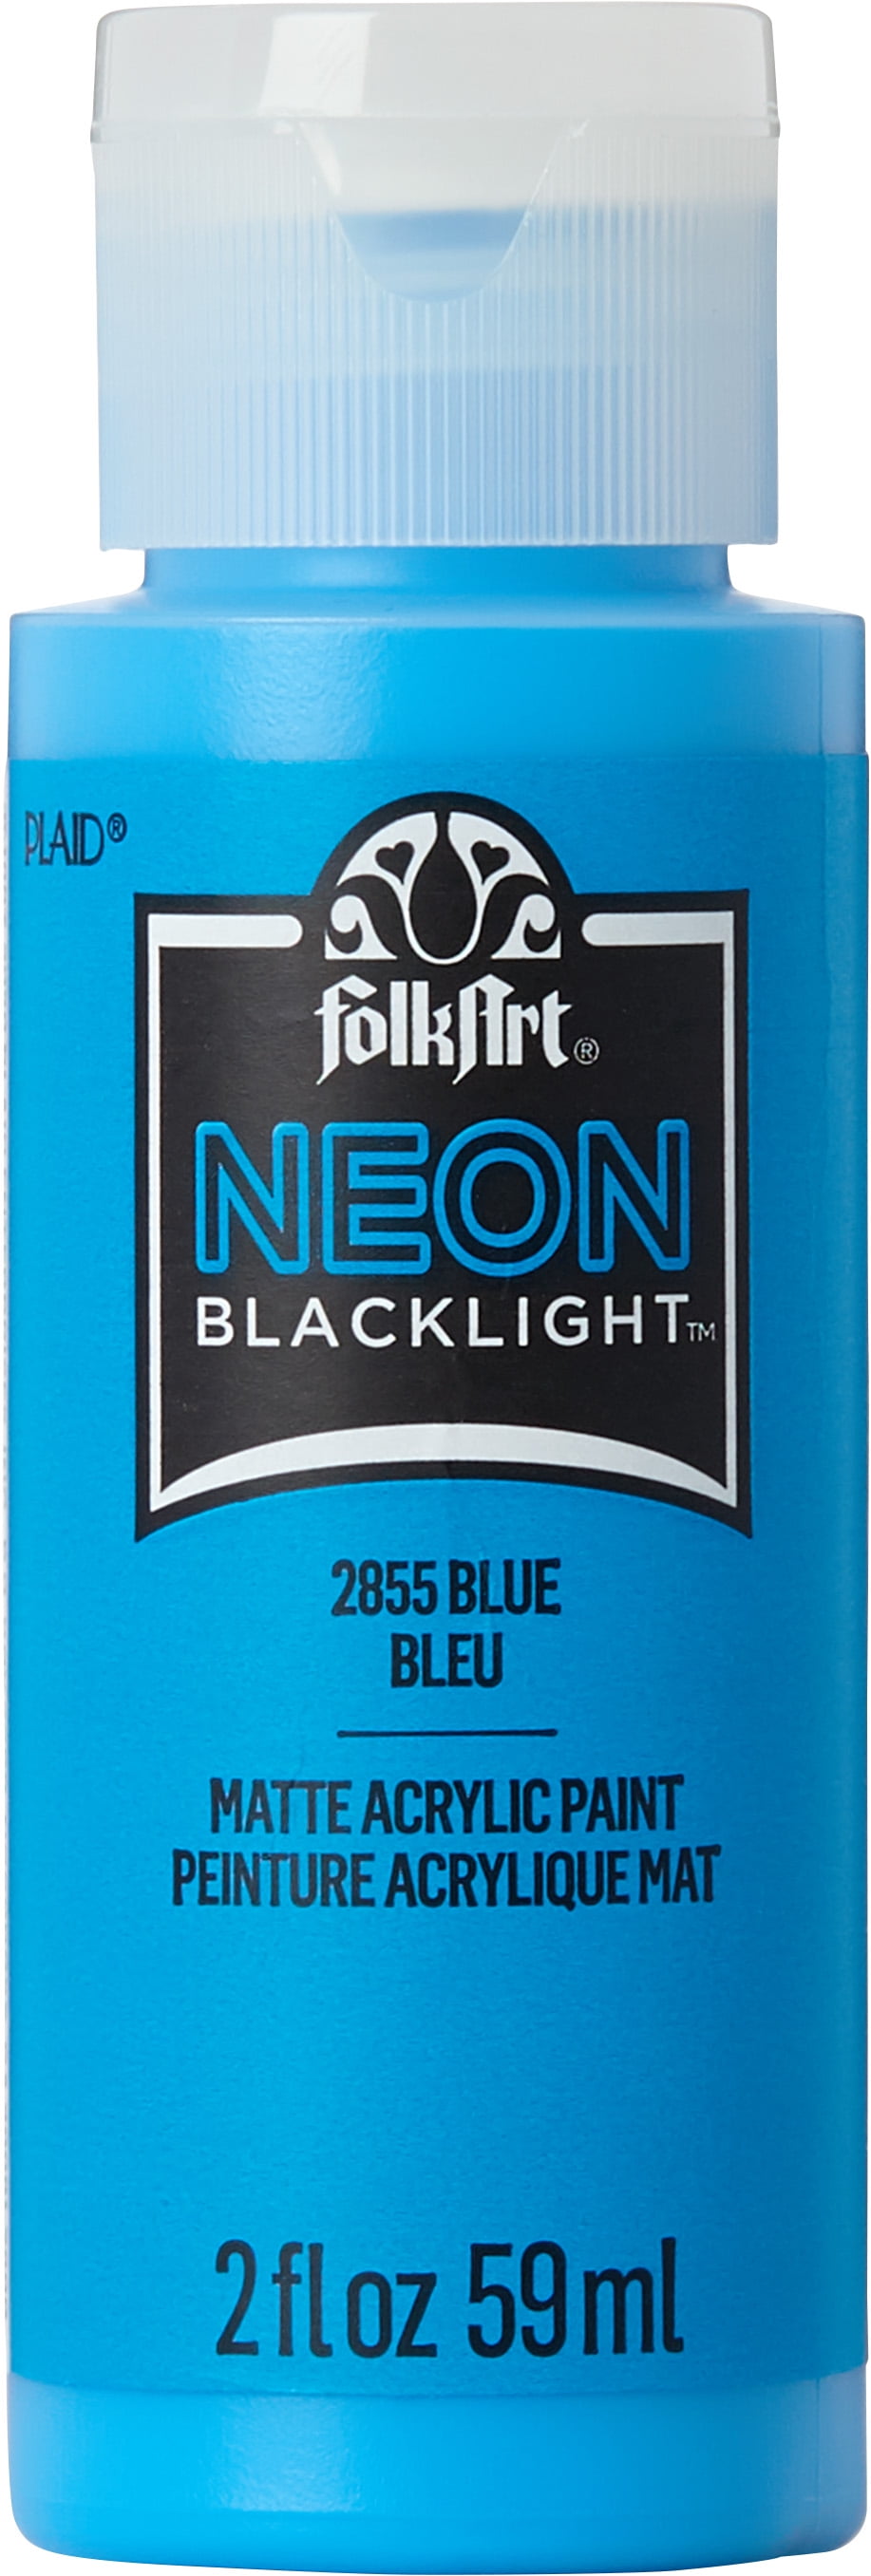 FolkArt Neon Blacklight Acrylic Paint, Hobby Lobby, 2181709